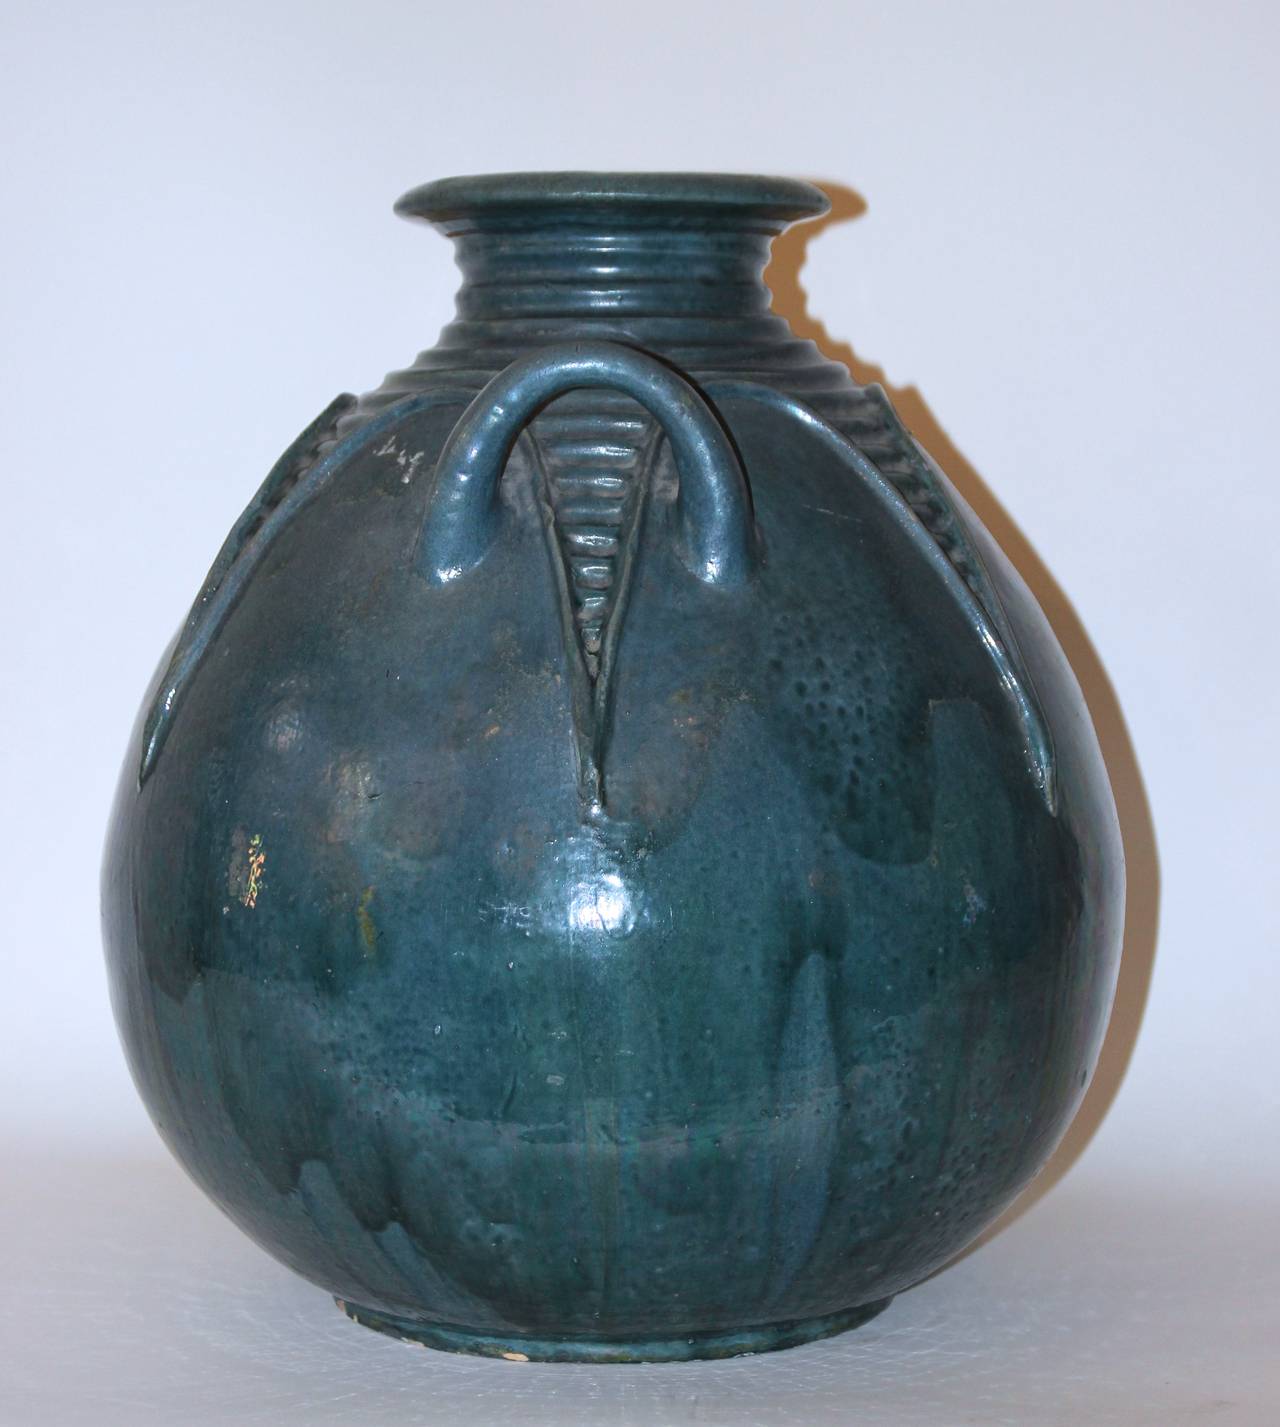 Large pottery,
Signed: BIOT, Glazed ceramic, 
Circa 1950, France.
Height: 57 cm, diameter: 42 cm.